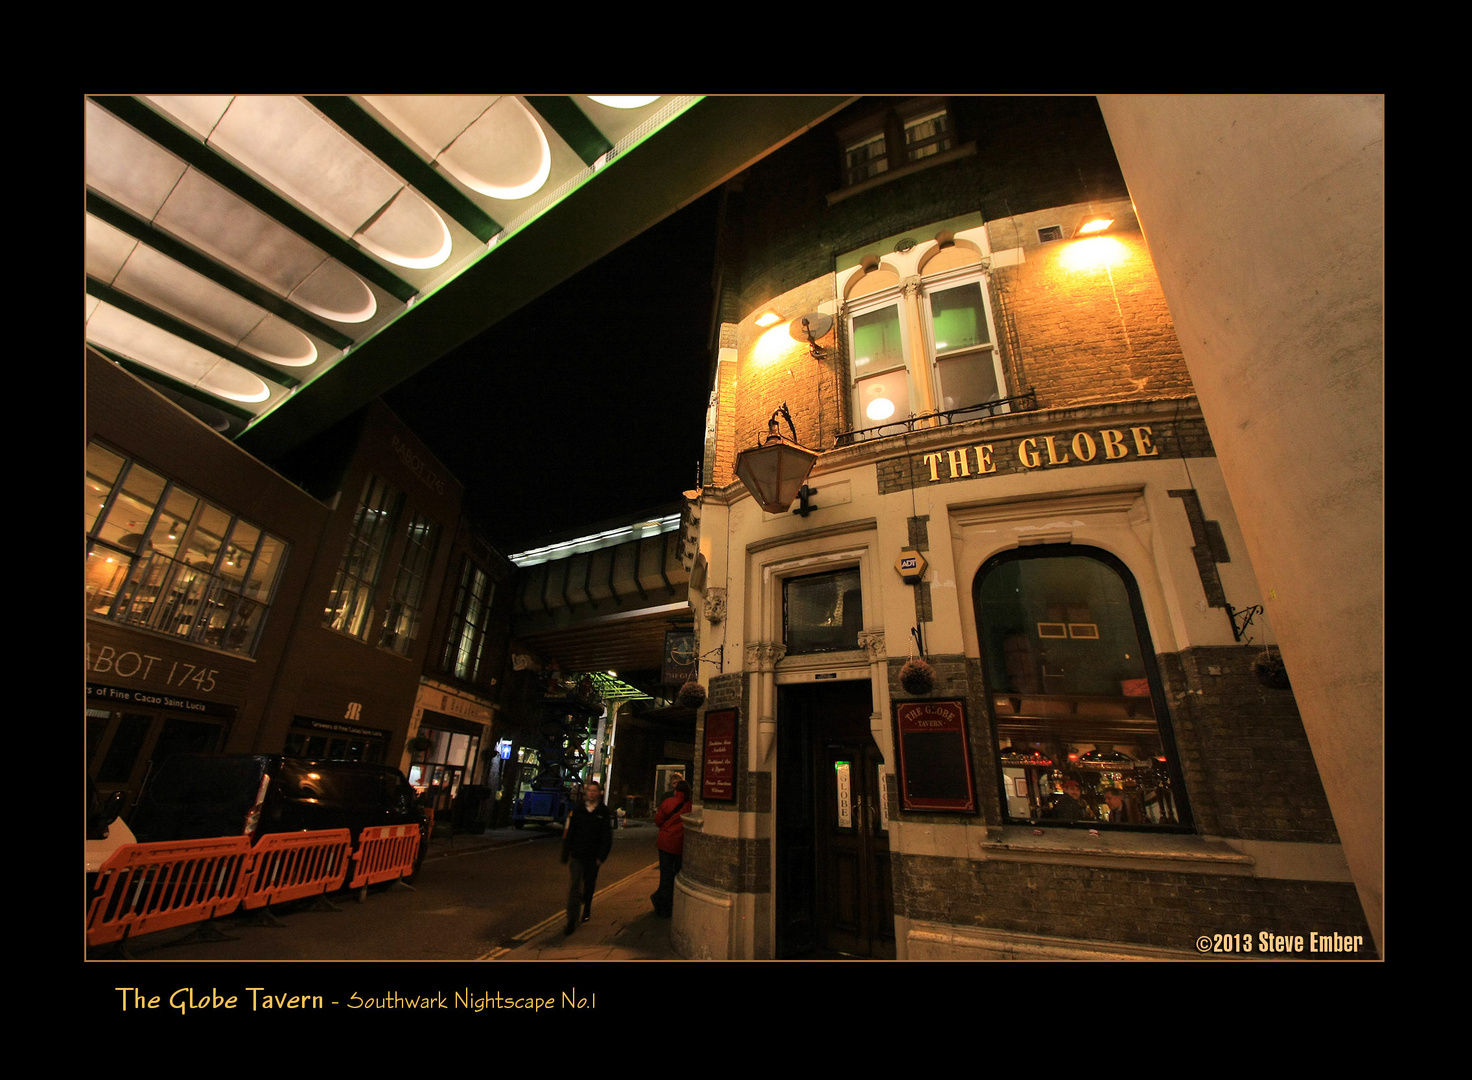 The Globe Tavern - Southwark Nightscape No. 1